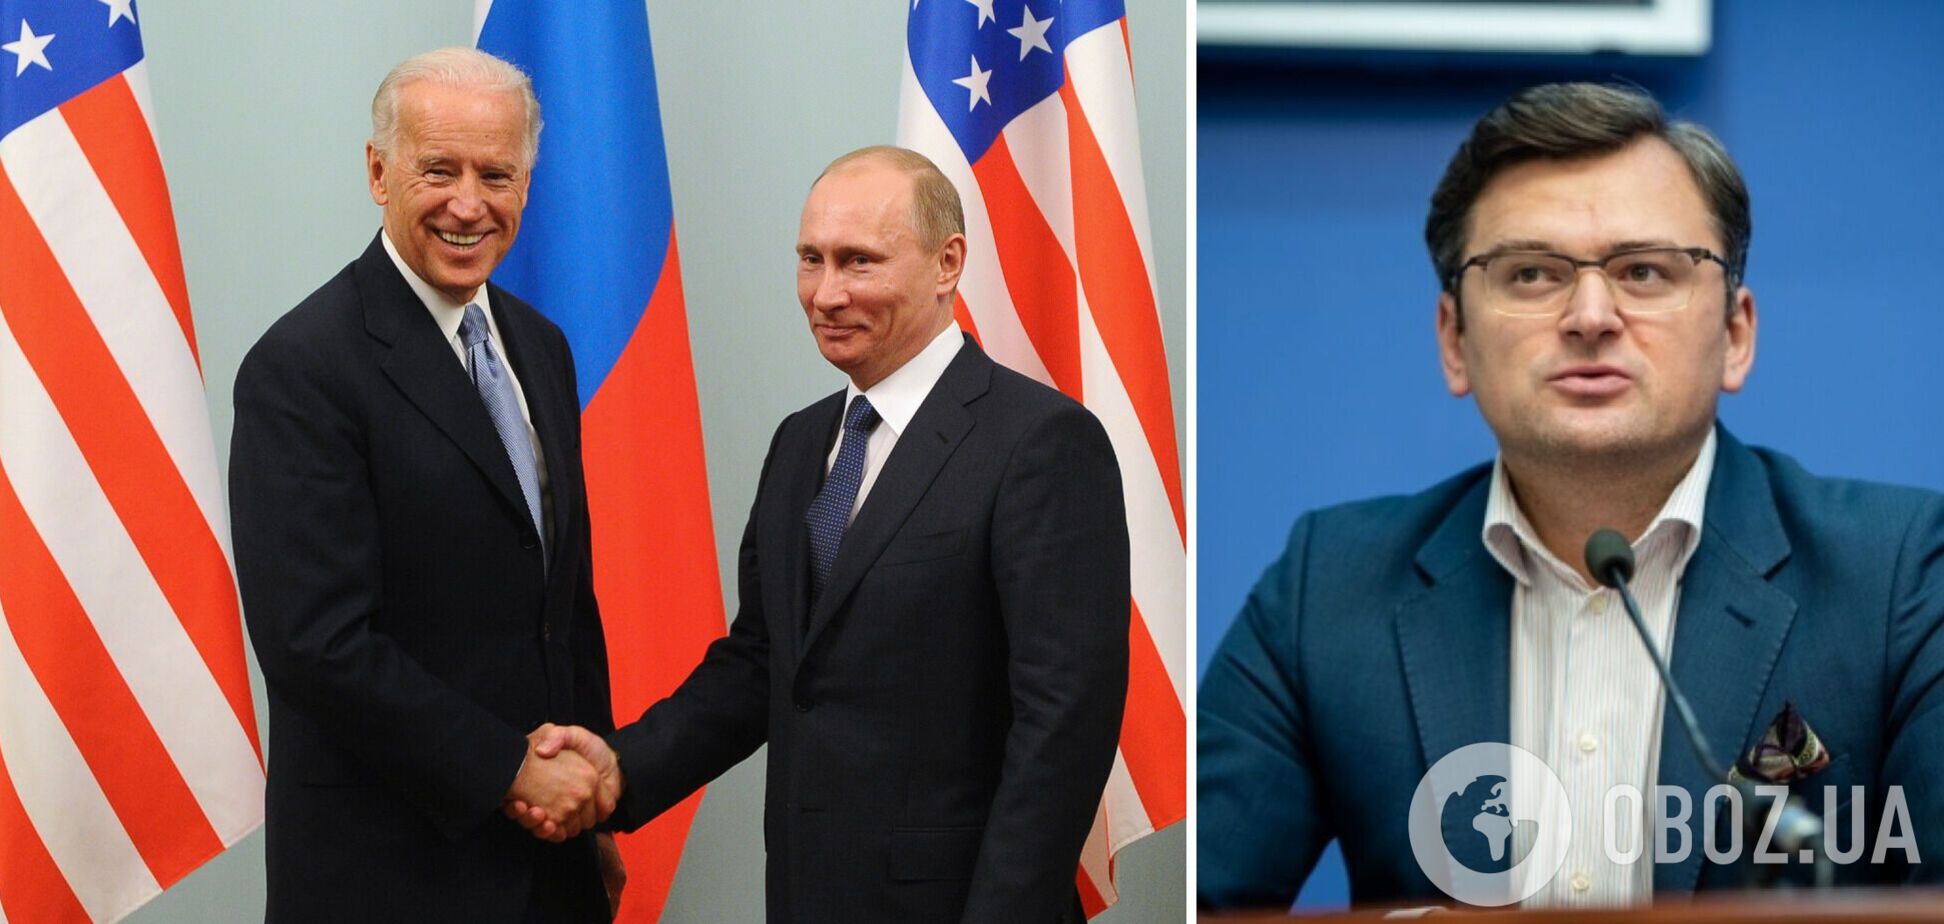 Украина приветствует инициативу саммита по безопасности с участием президентов США и РФ, сообщил Кулеба